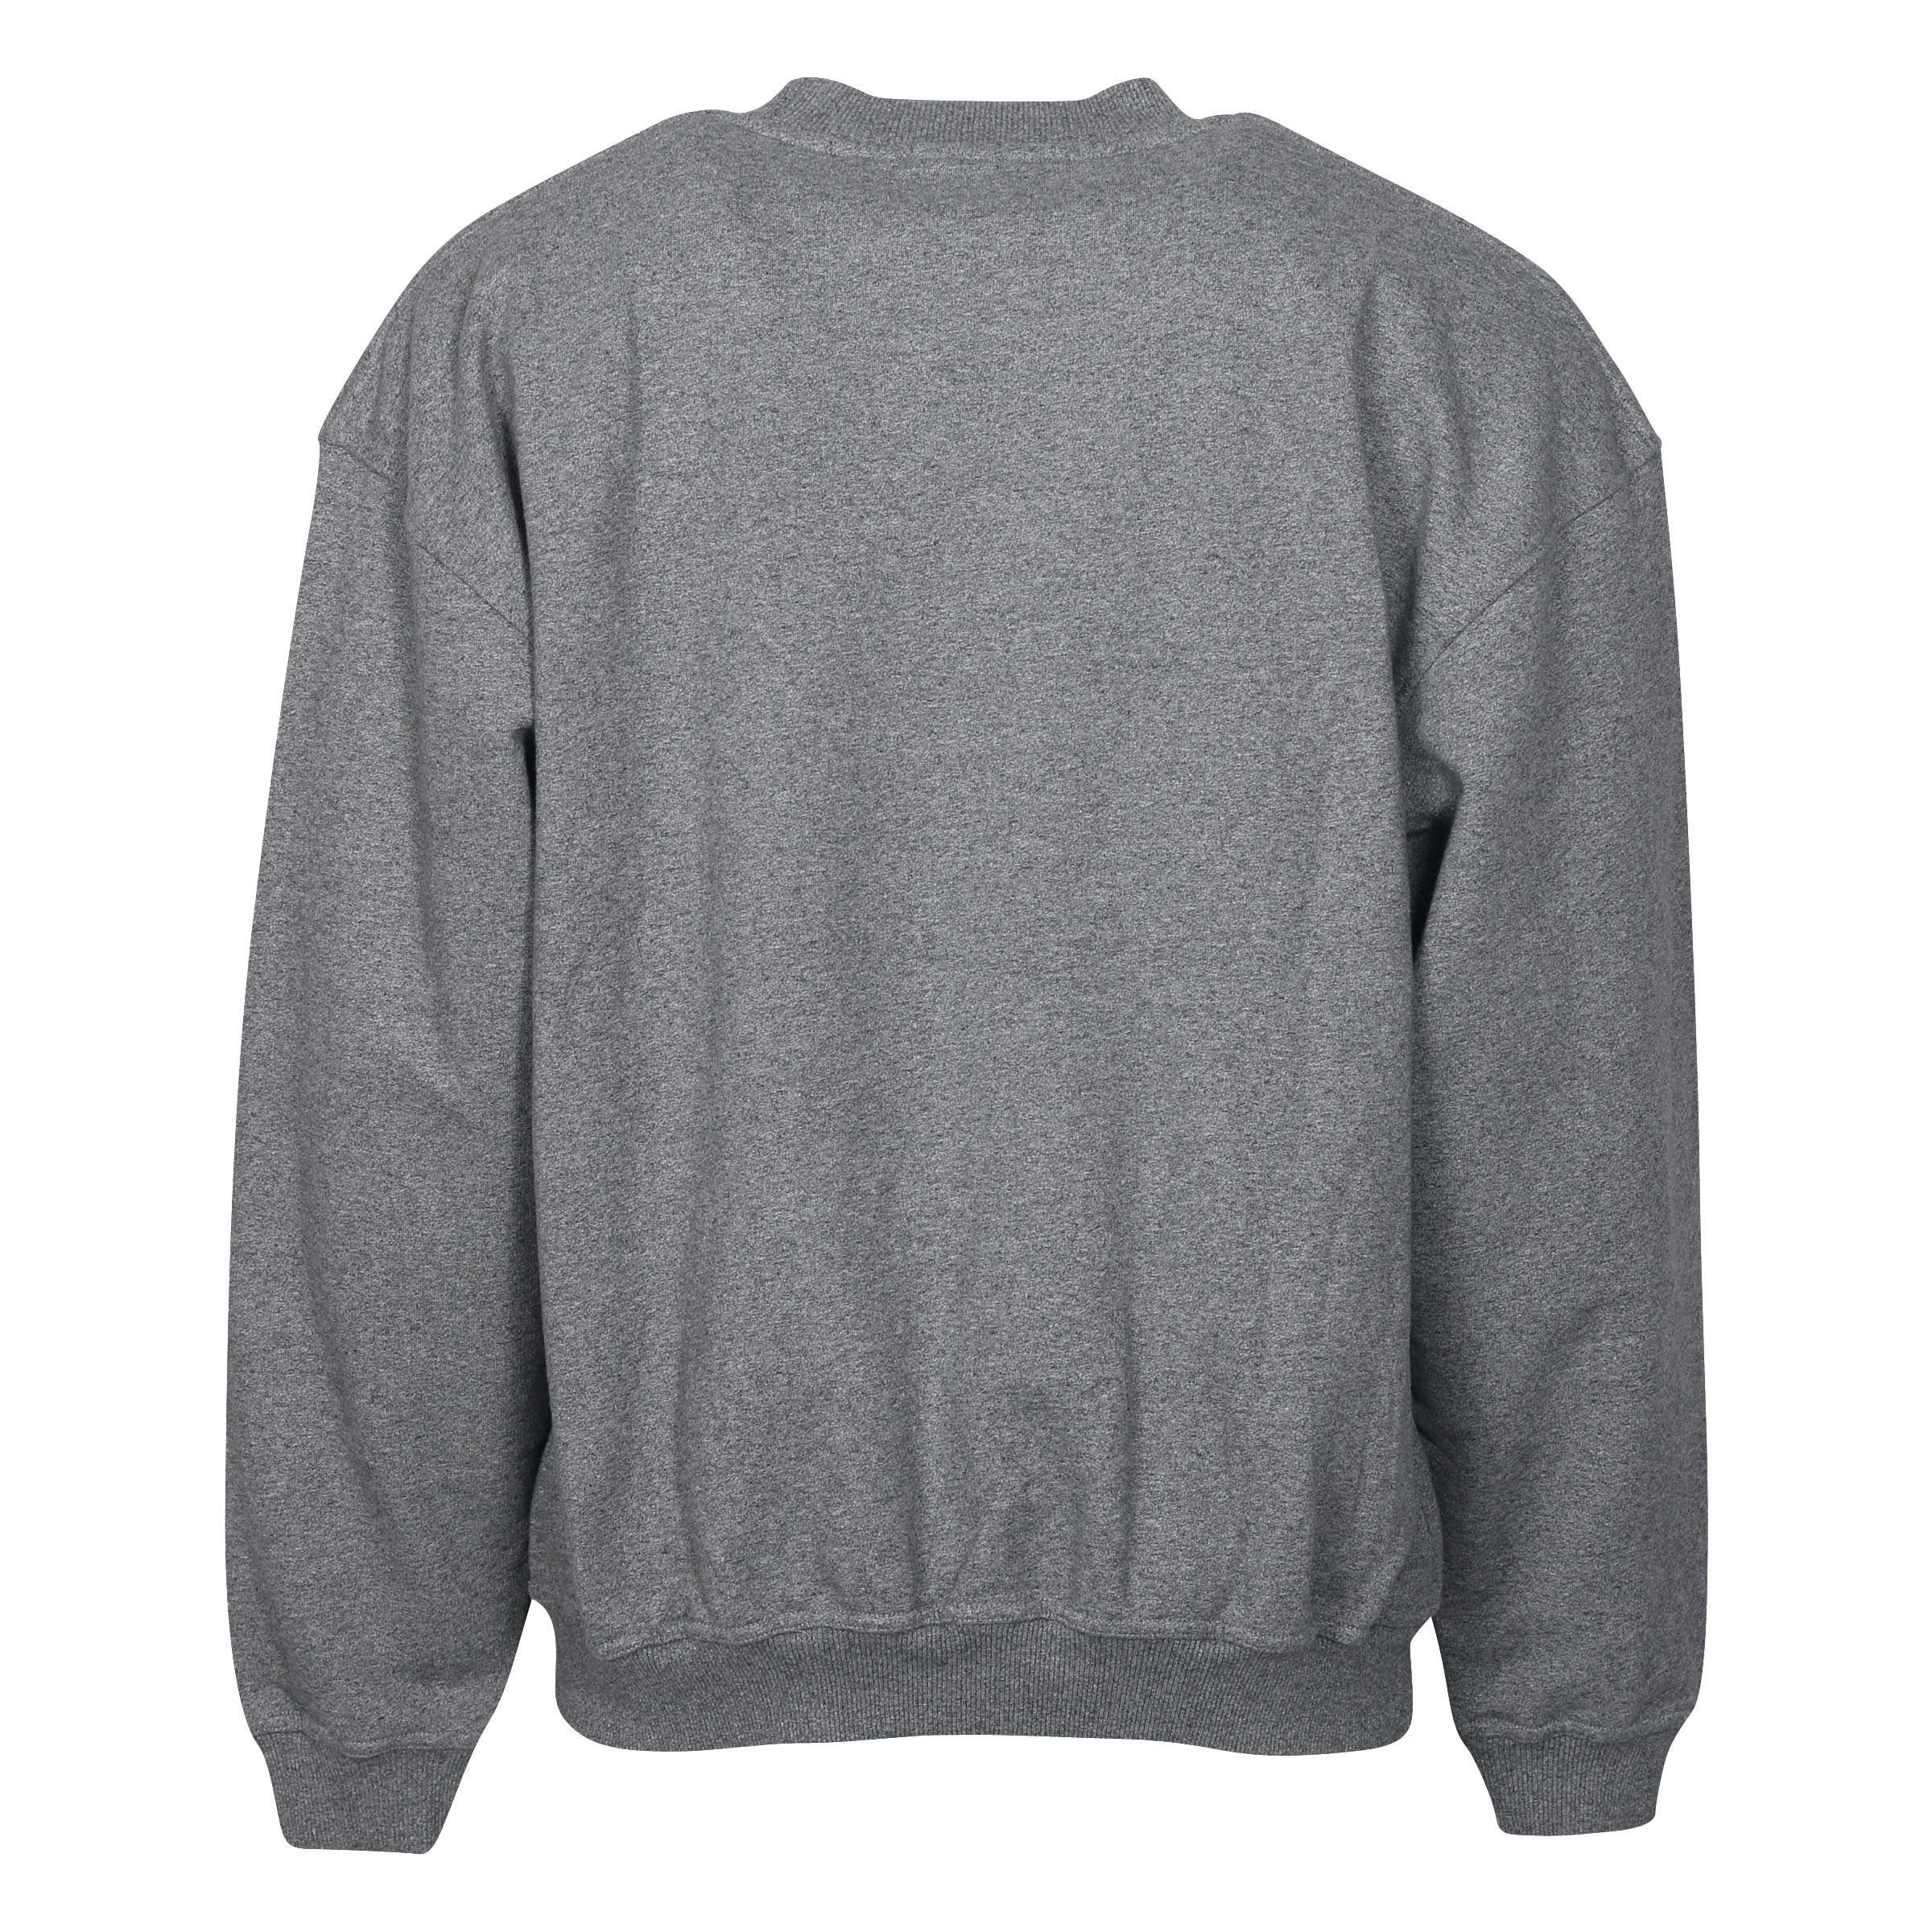 Represent Blank Sweater in Grey Melange